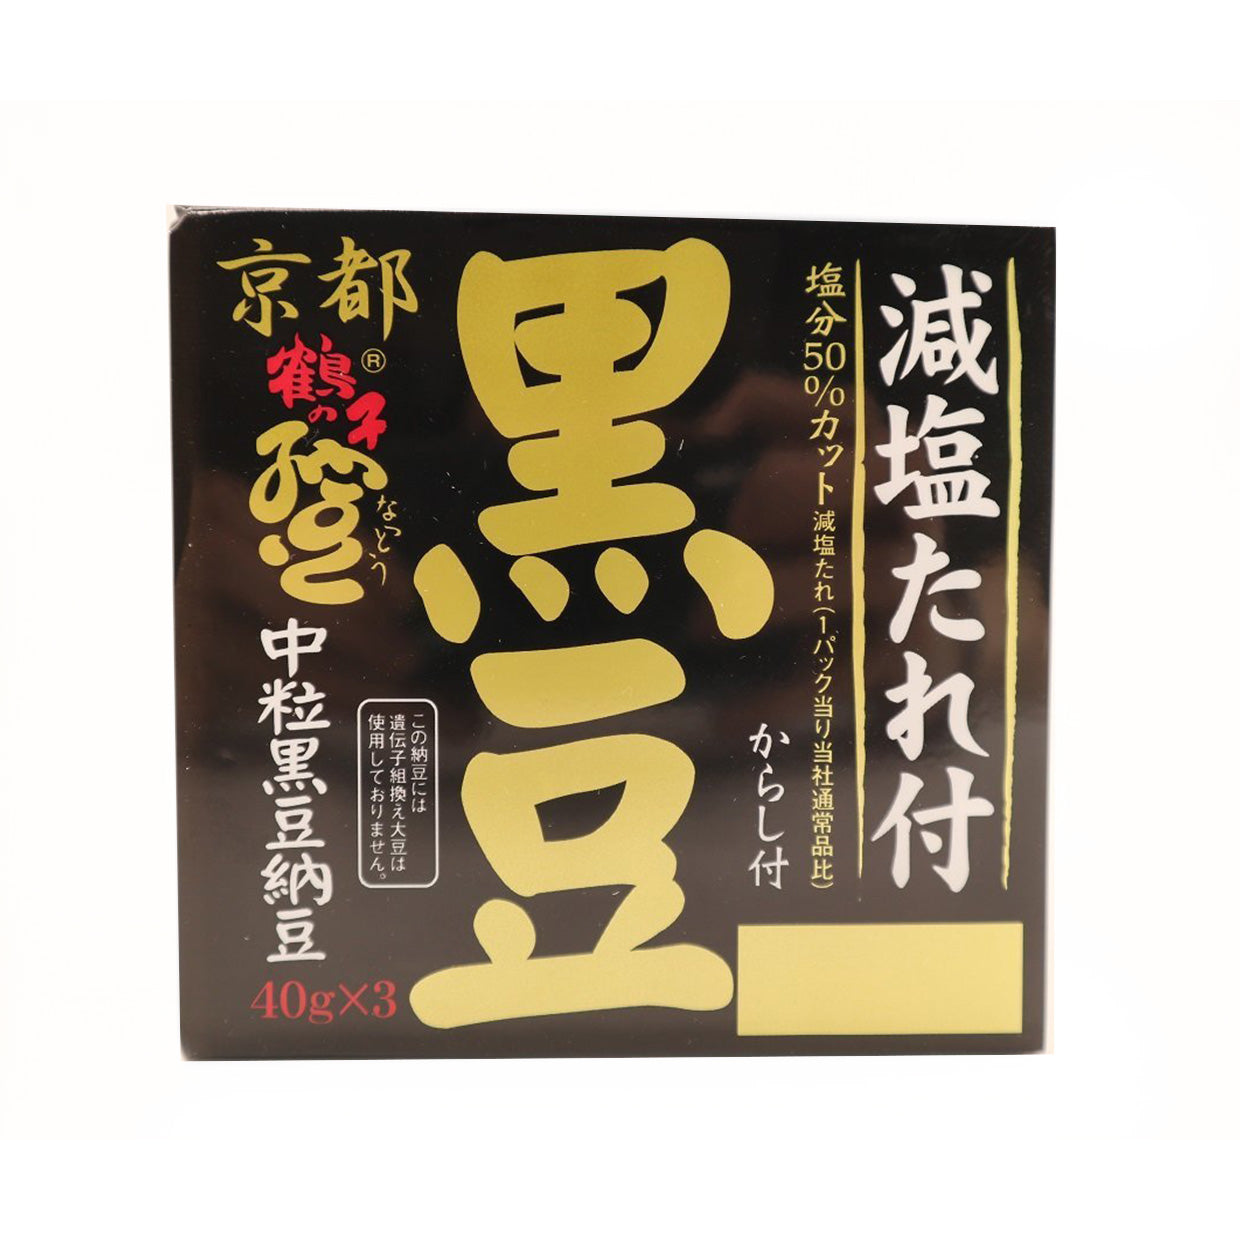 #8506 Takahashi - 黑豆納豆3P (45g x 3) BLACK BEAN NATTO 3P